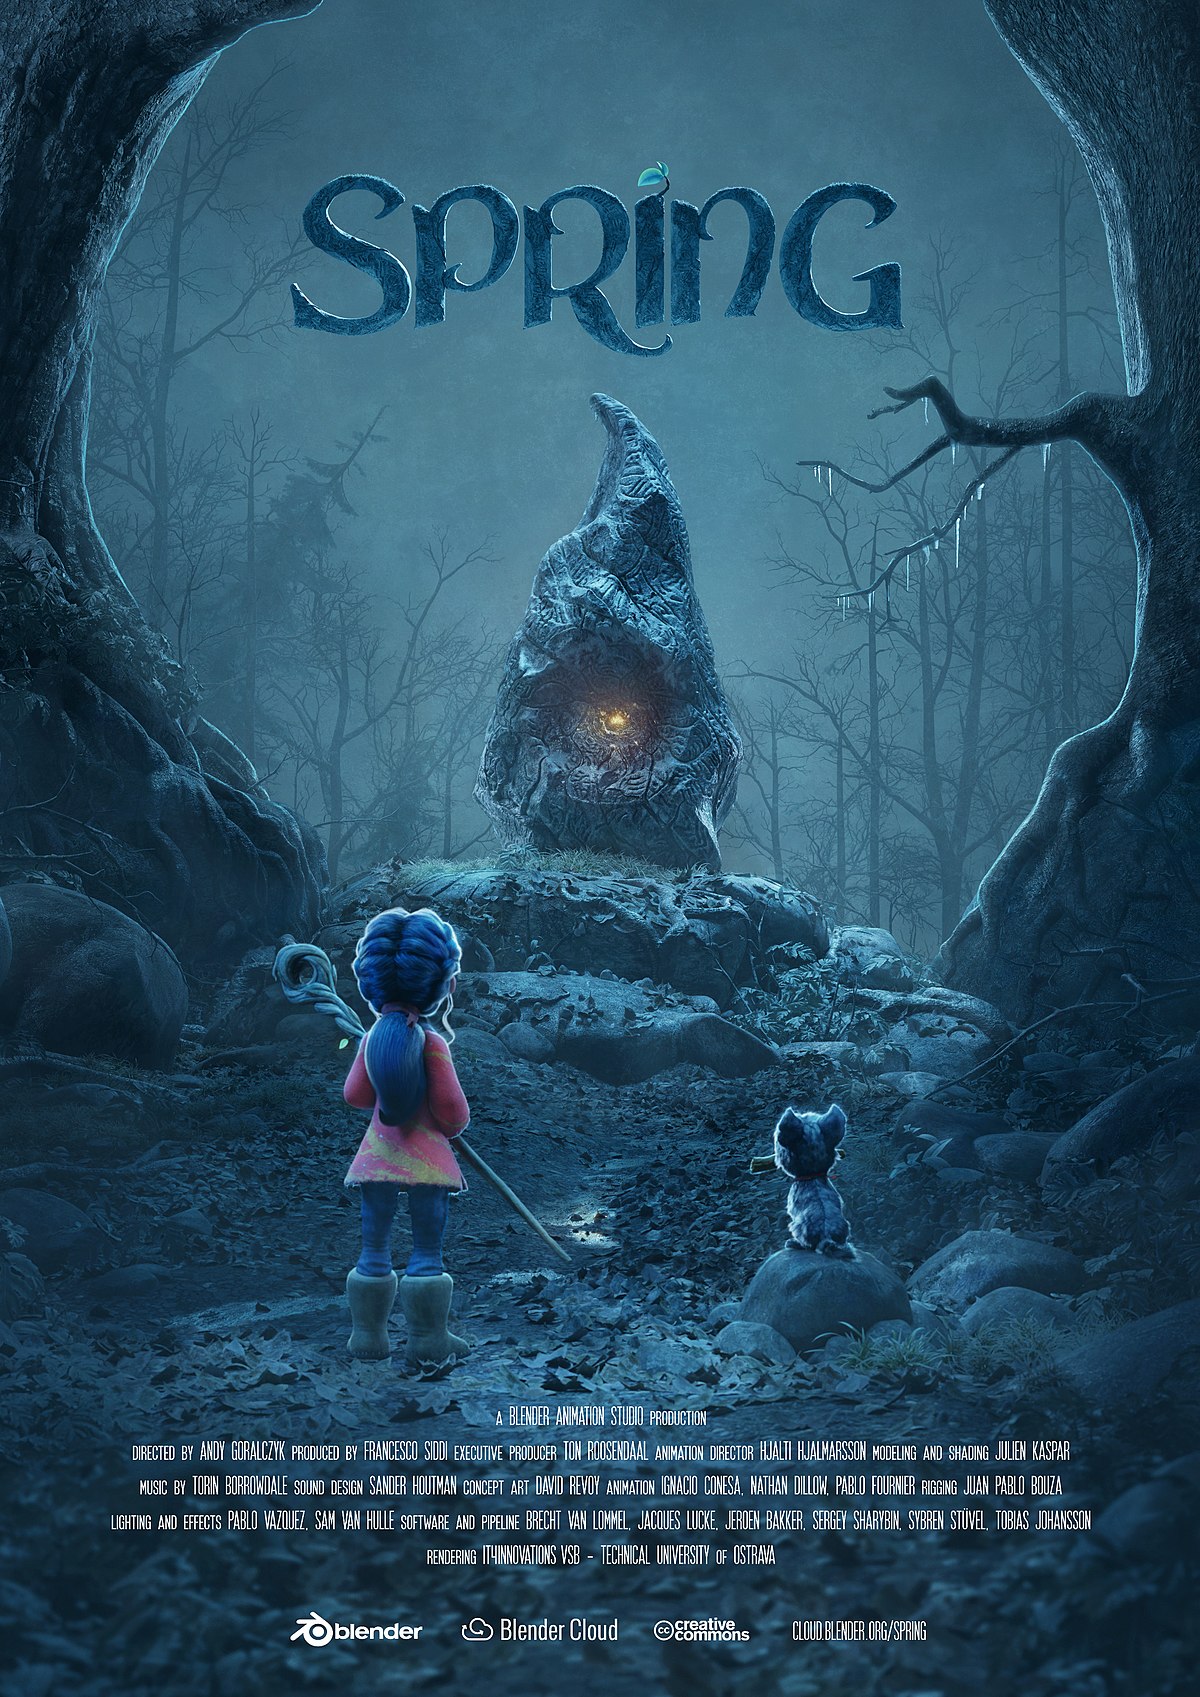 Spring (2019 film) - Wikipedia